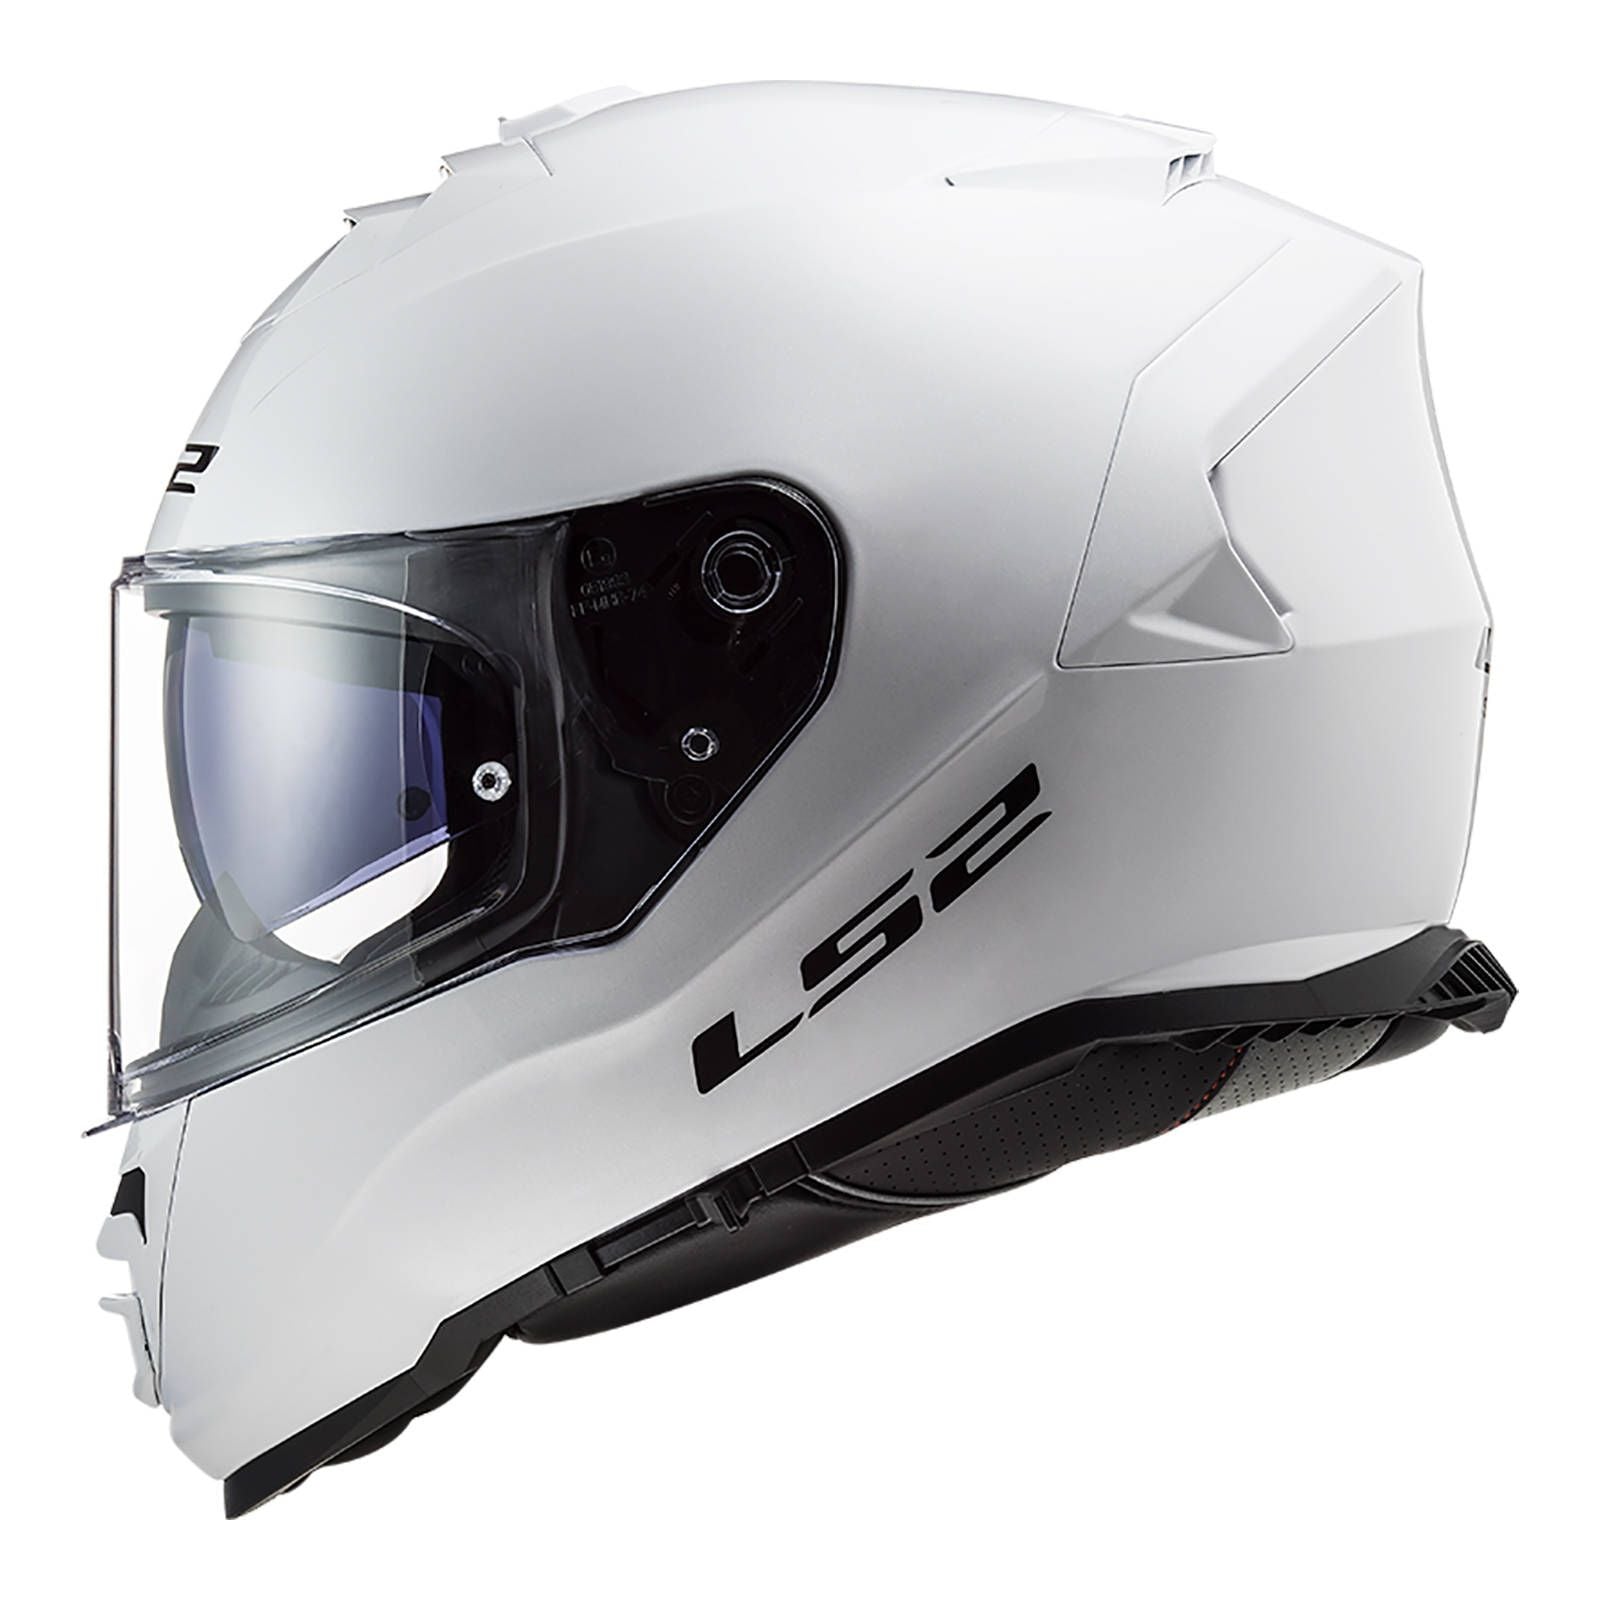 New LS2 FF800 Storm Helmet - White (S) #LS2FF800SOLWHS